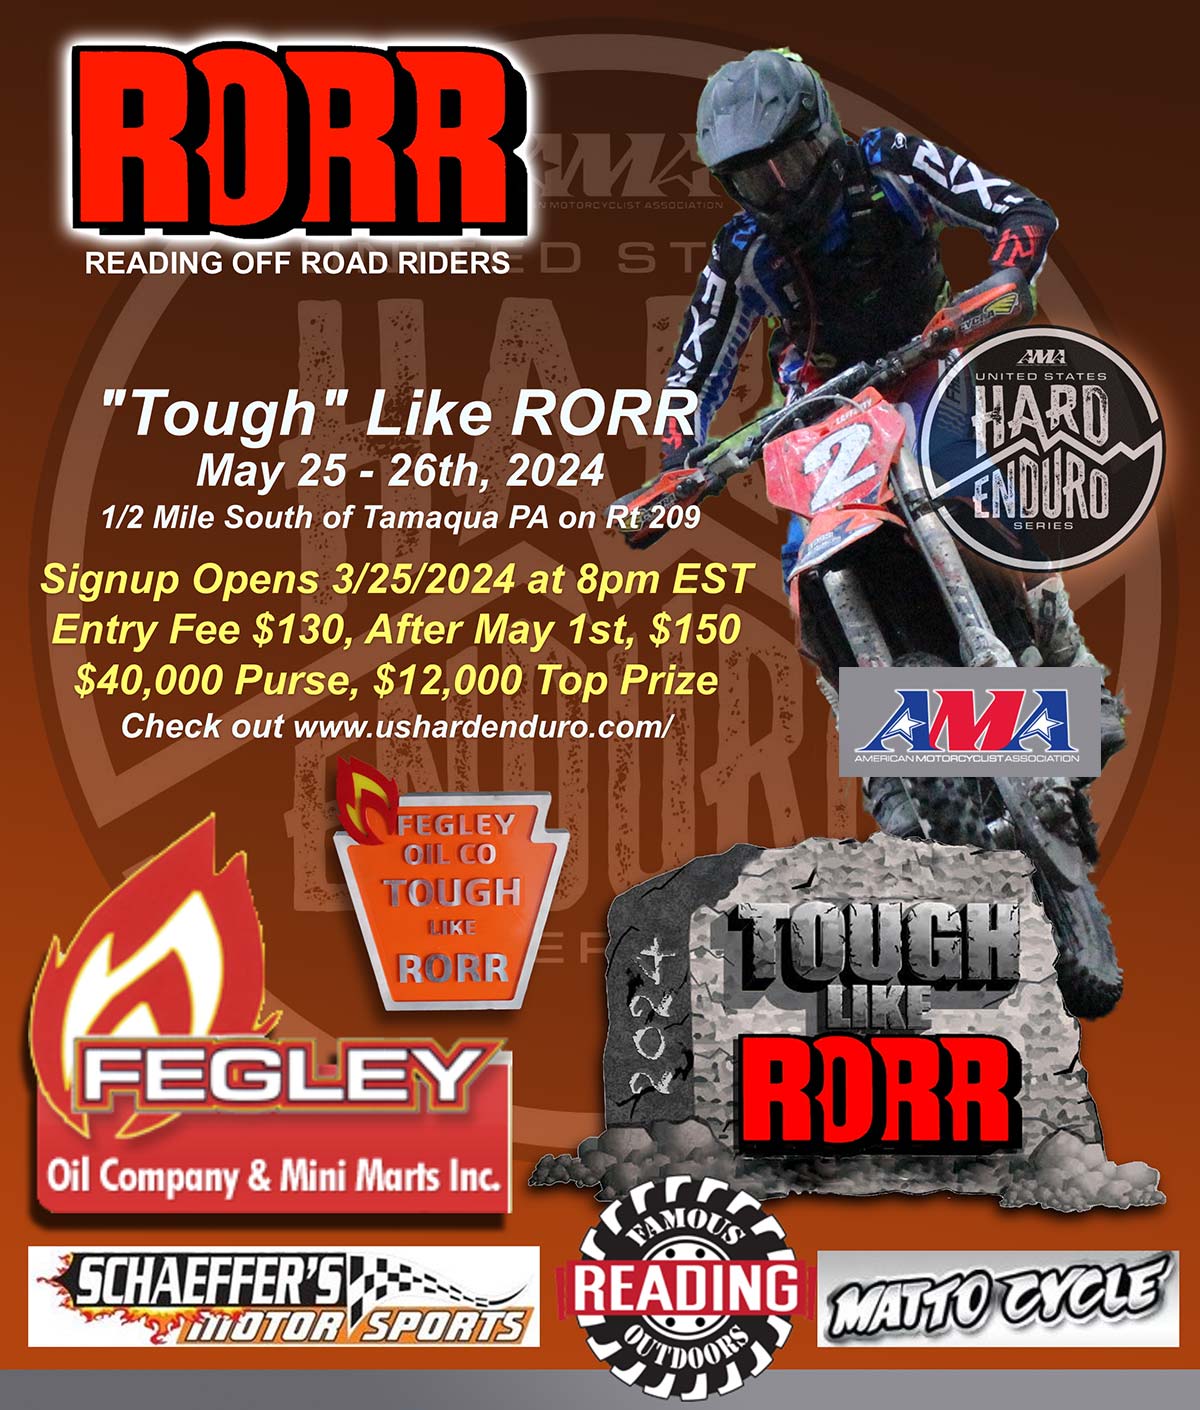 Tough Like RORR 2024 Event - May 25 thru 26th.